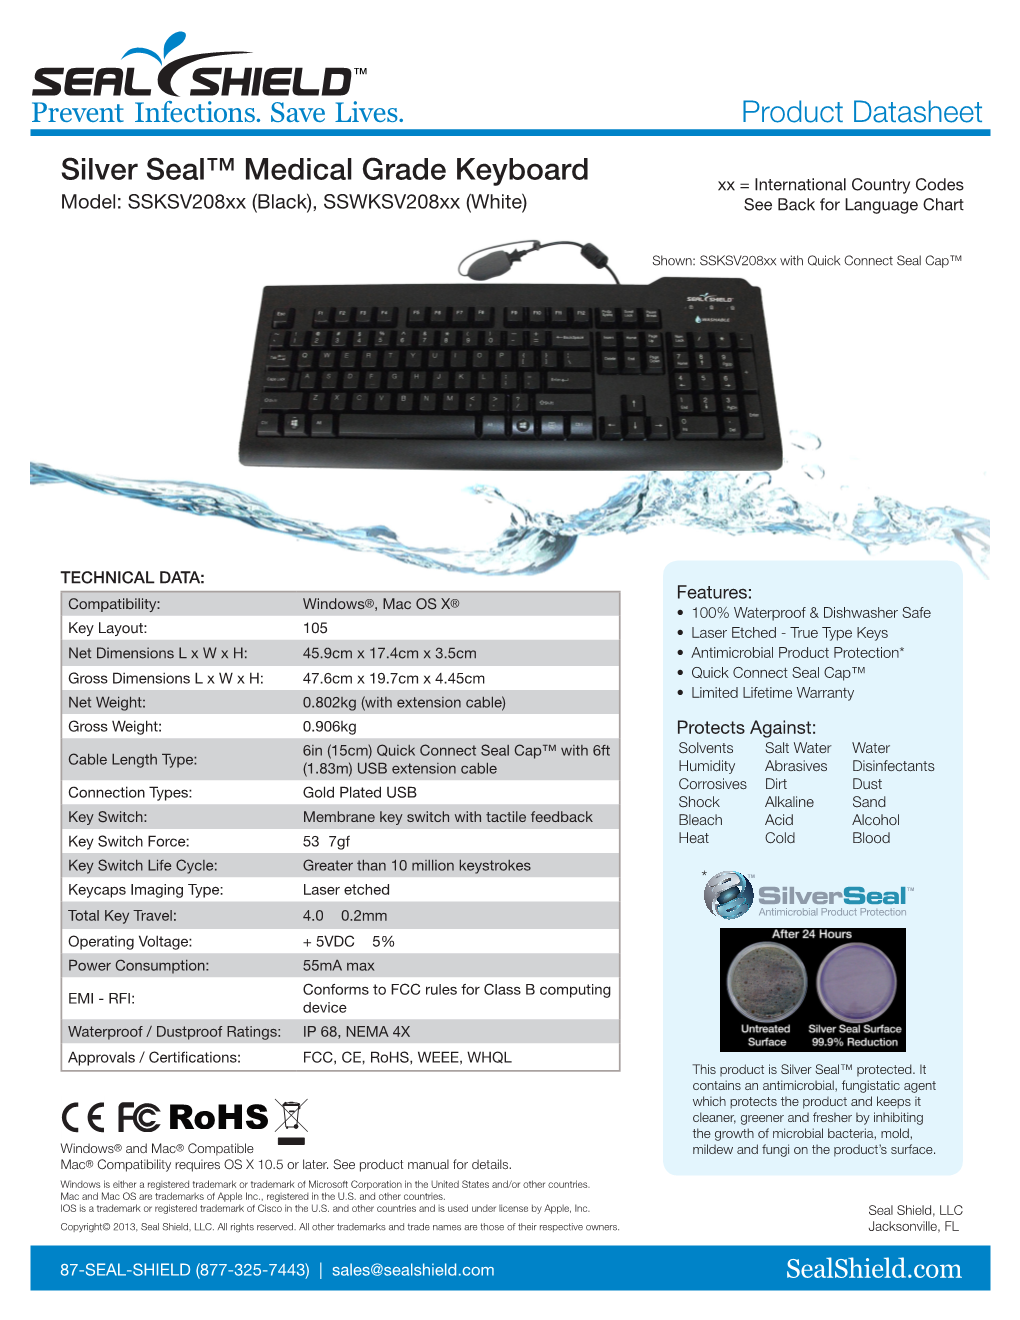 Product Datasheet Silver Seal™ Medical Grade Keyboard